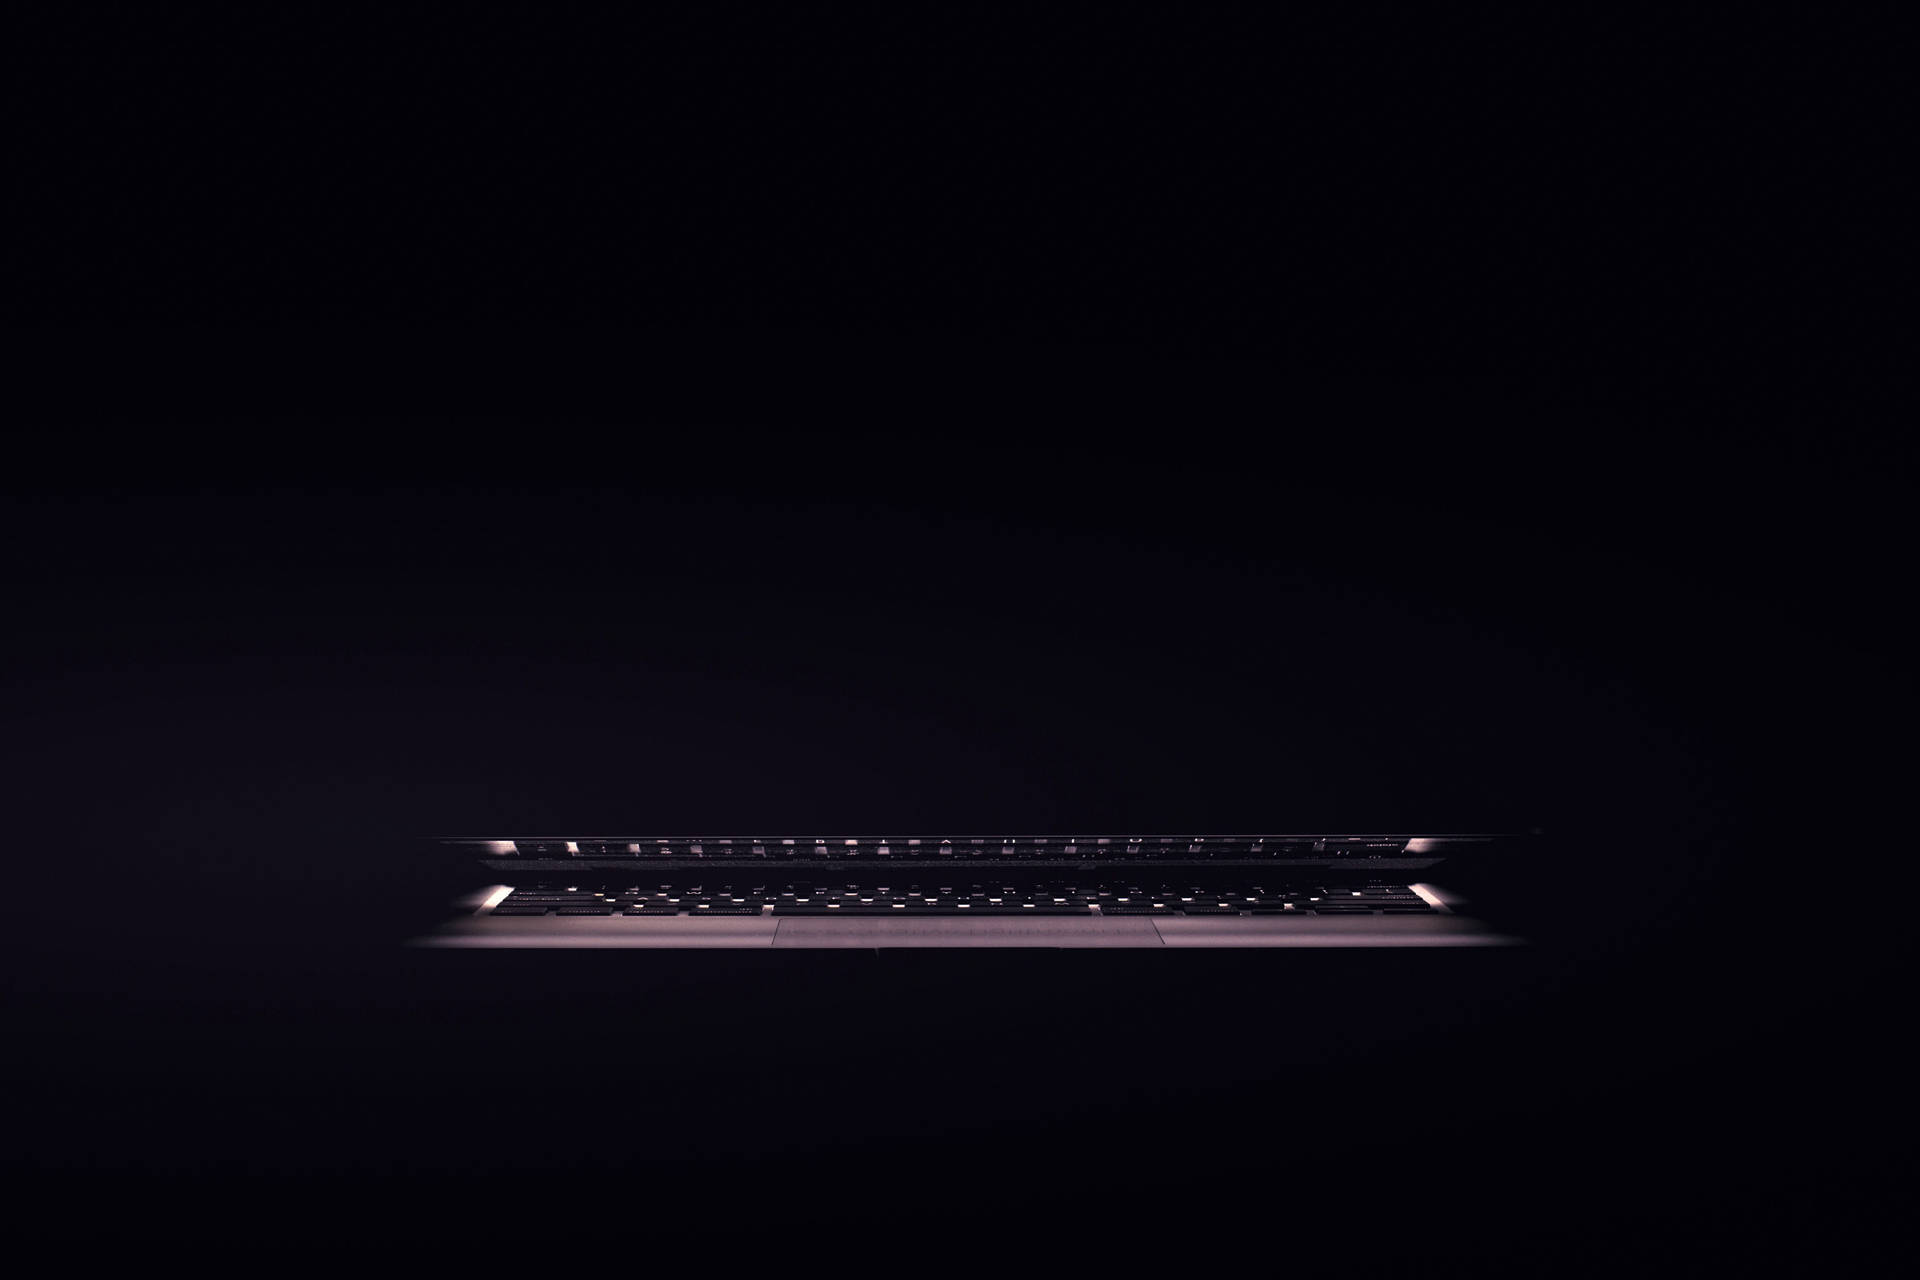 Illuminated Dark Laptop Keyboard Background